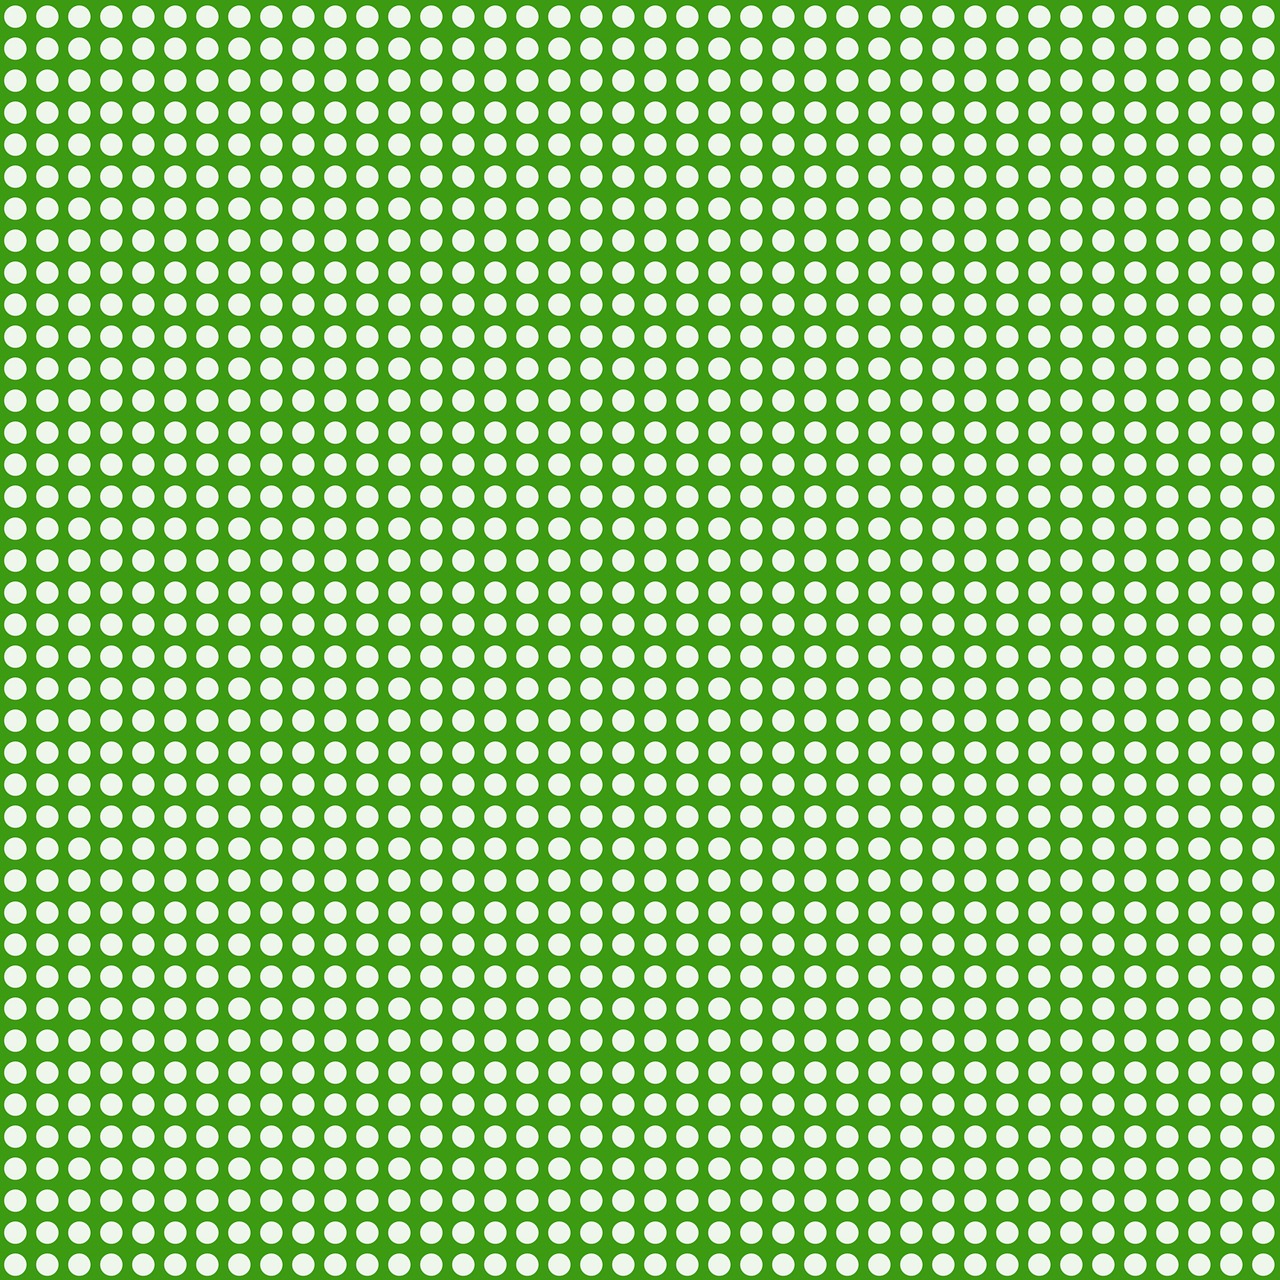 points pattern green free photo